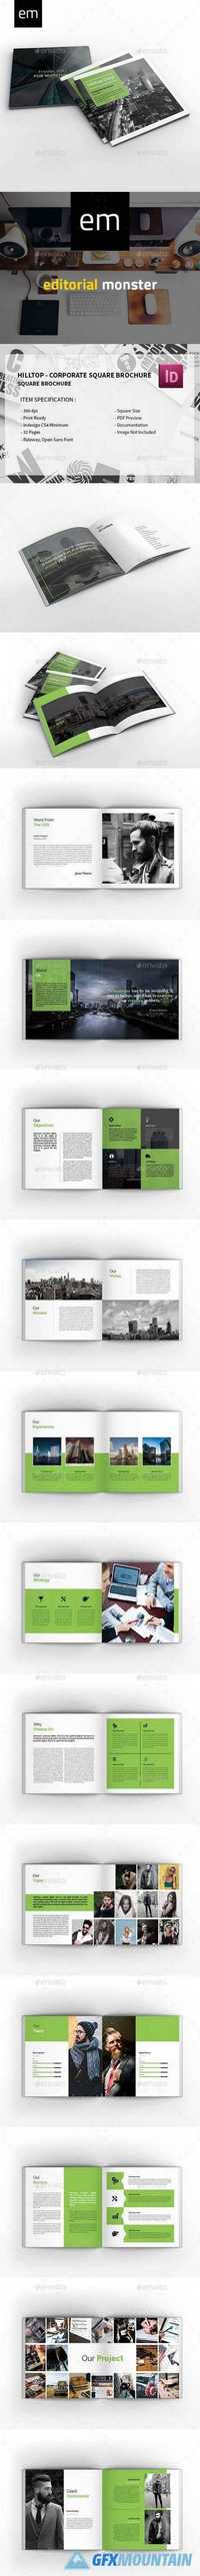 Hilltop - Corporate Square Brochure 20206347